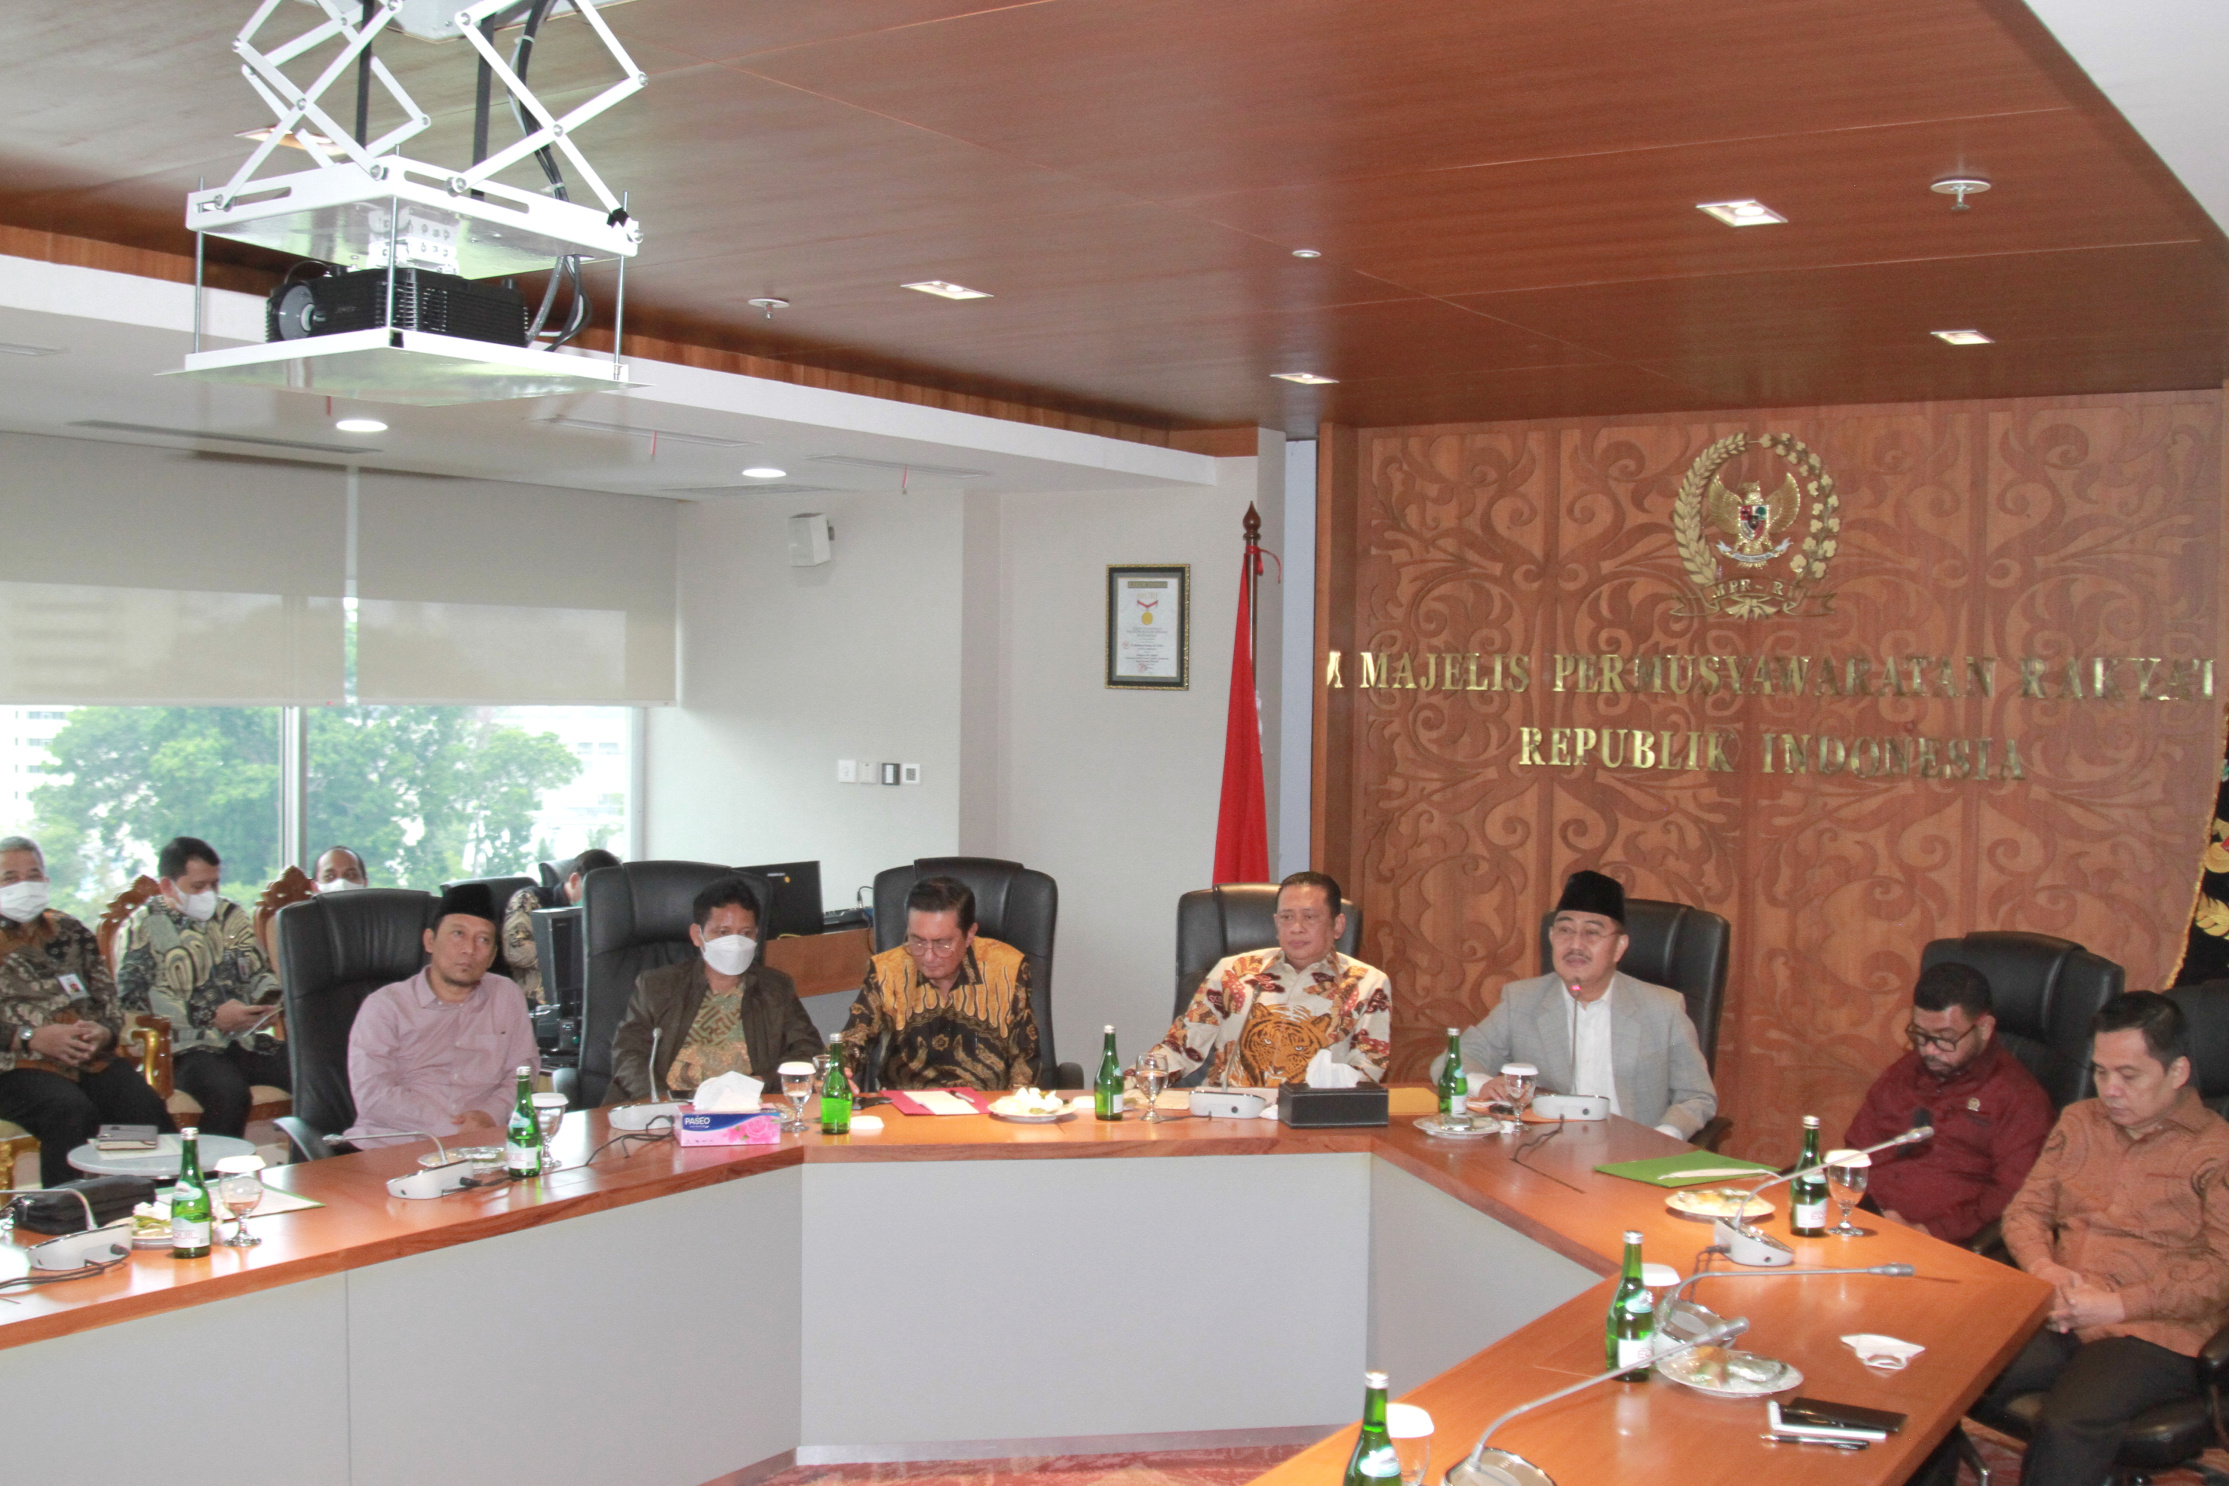 Ketua MPR RI Bambang Soesatyo Sepakat bentuk Forum Aspirasi (Ashar/SinPo.id)